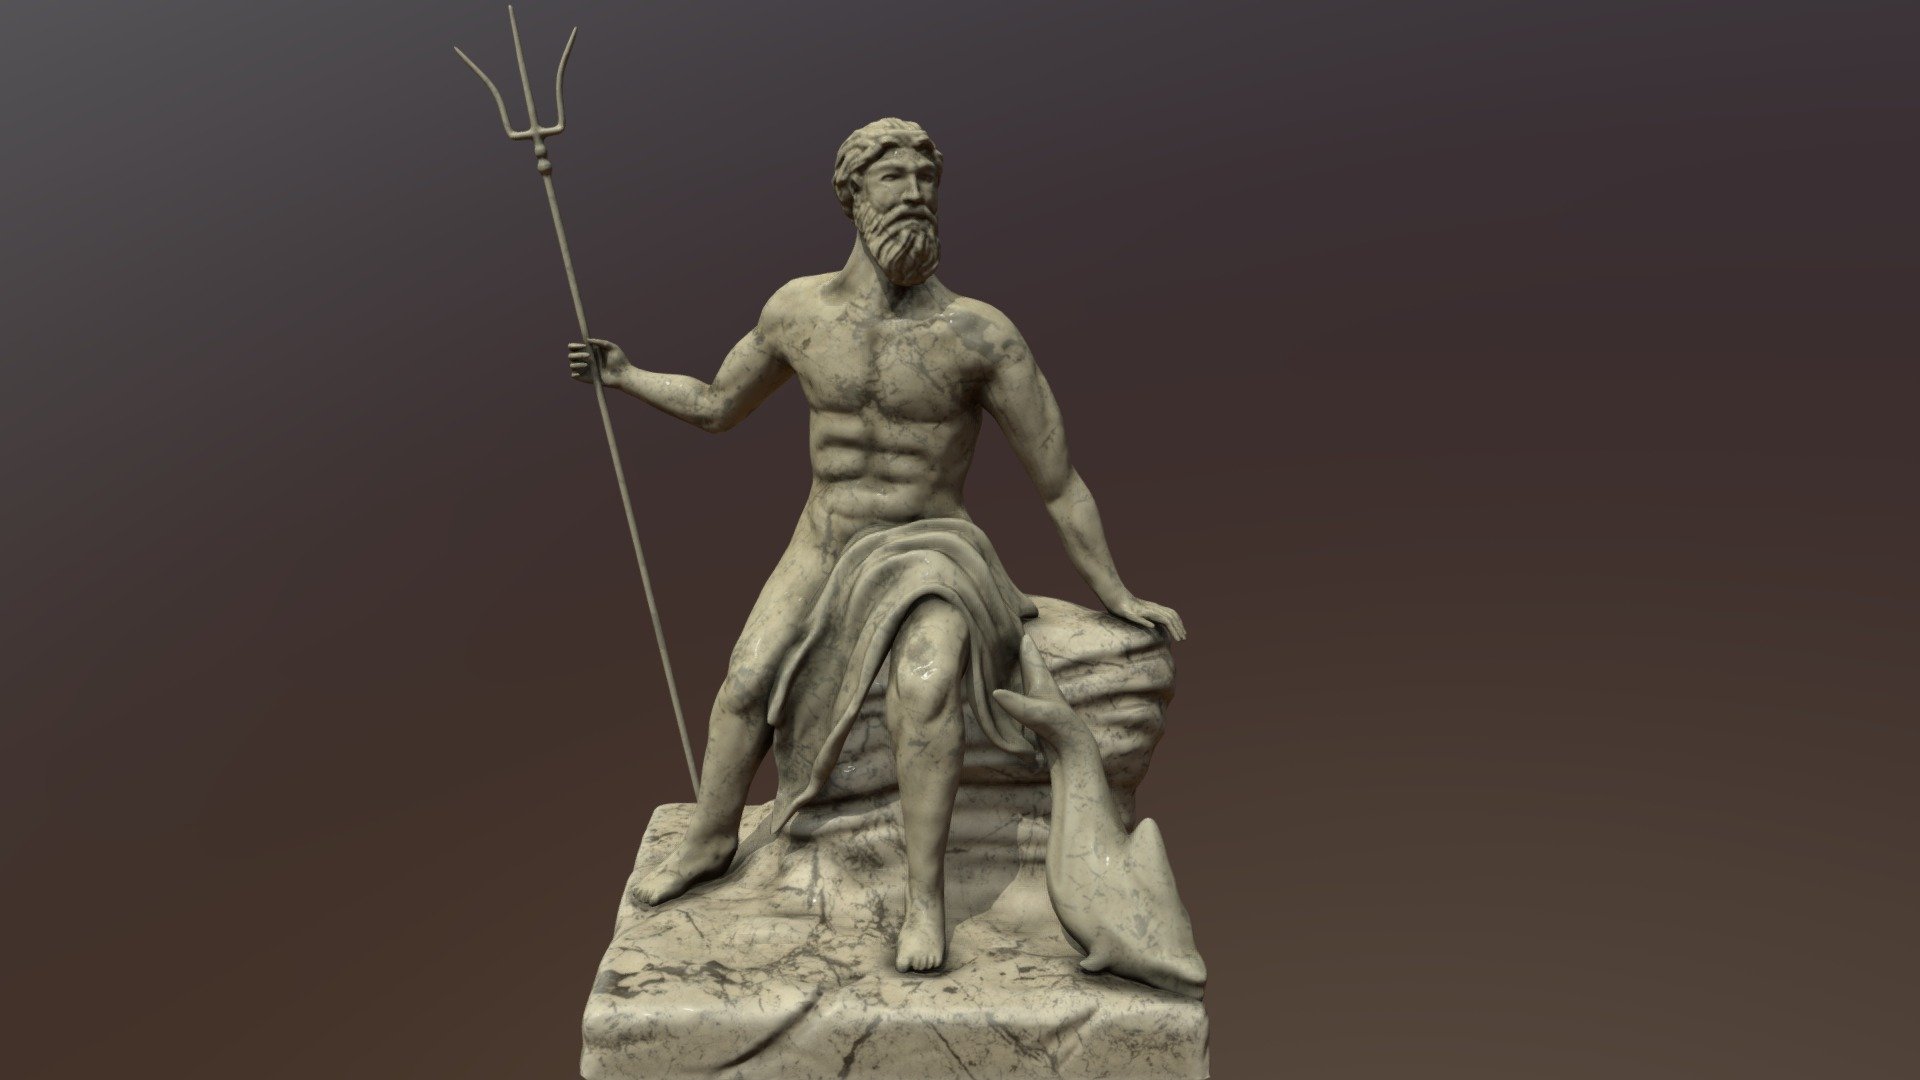 Poseidon sculpt based on the version in the port of Copenhagen - Poseidon Statue - Buy Royalty Free 3D model by Rebecca Gainer (@rebeccaG) 3d model